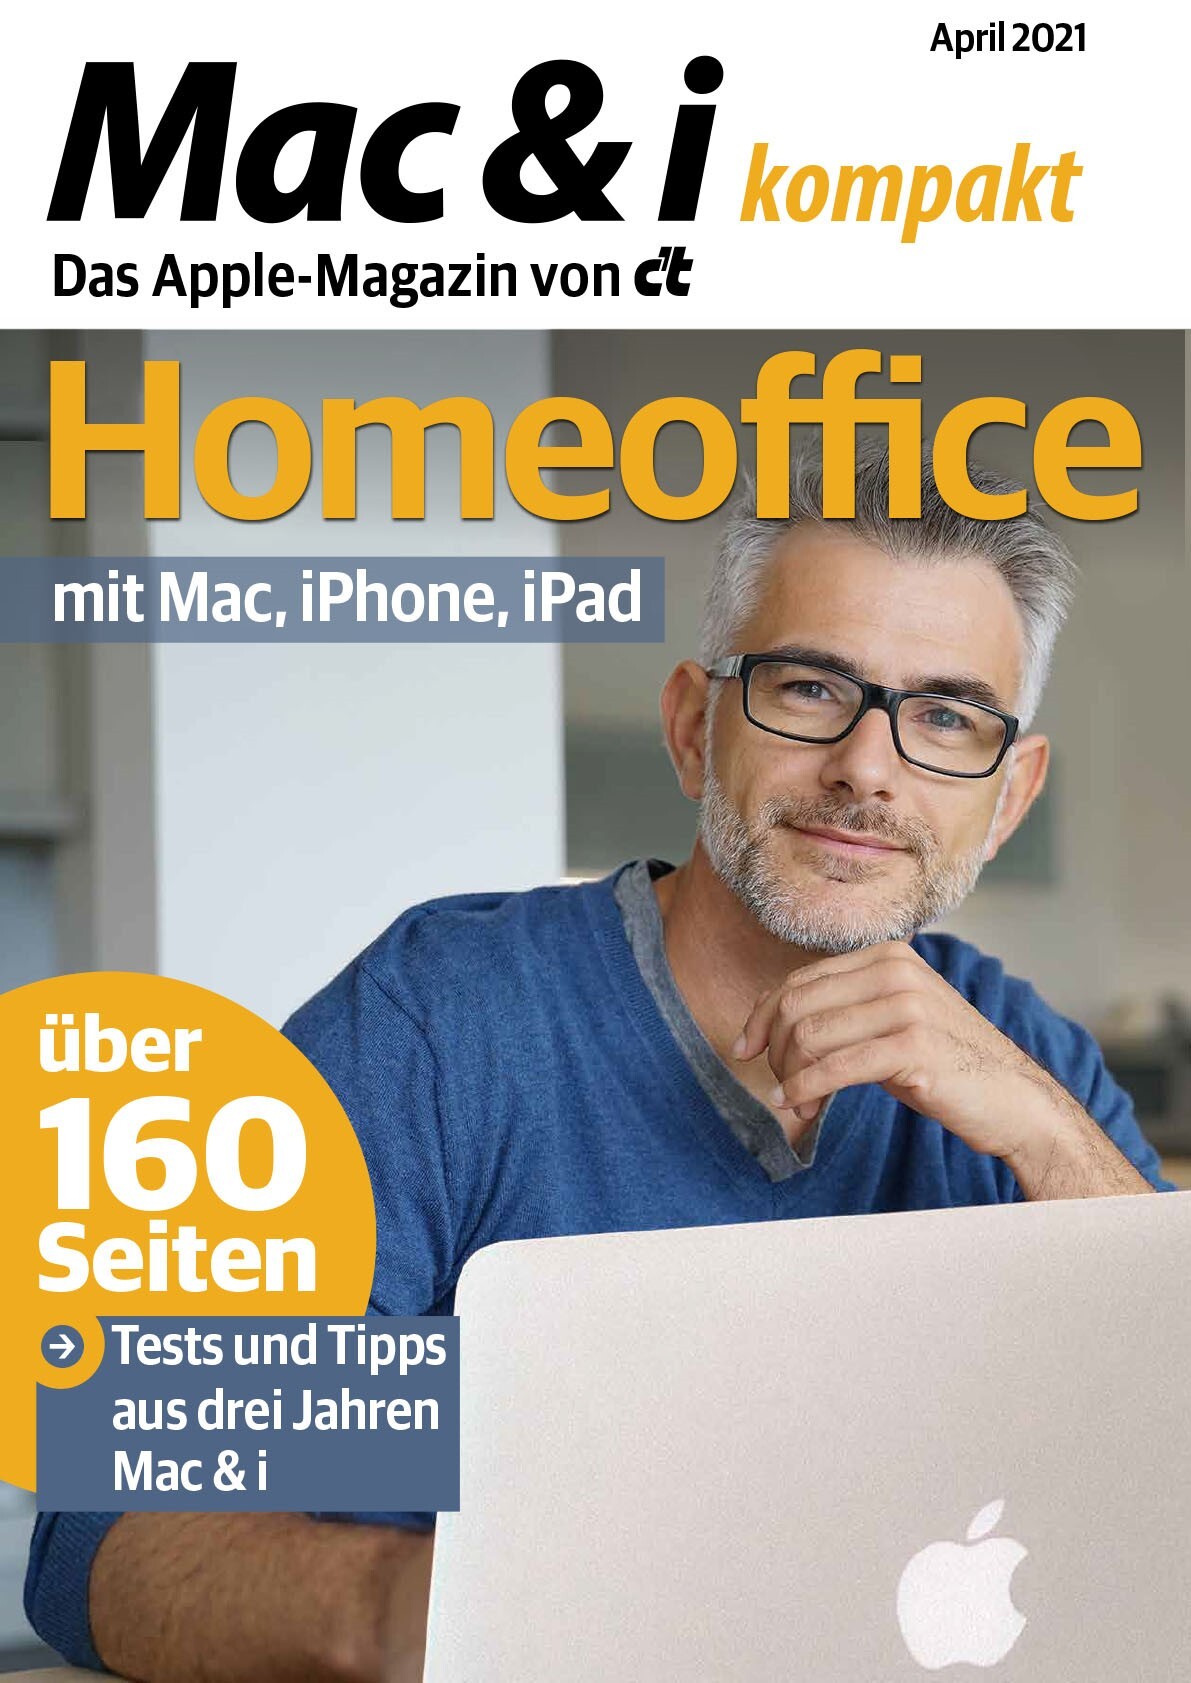 Mac & i kompakt - Homeoffice (PDF)